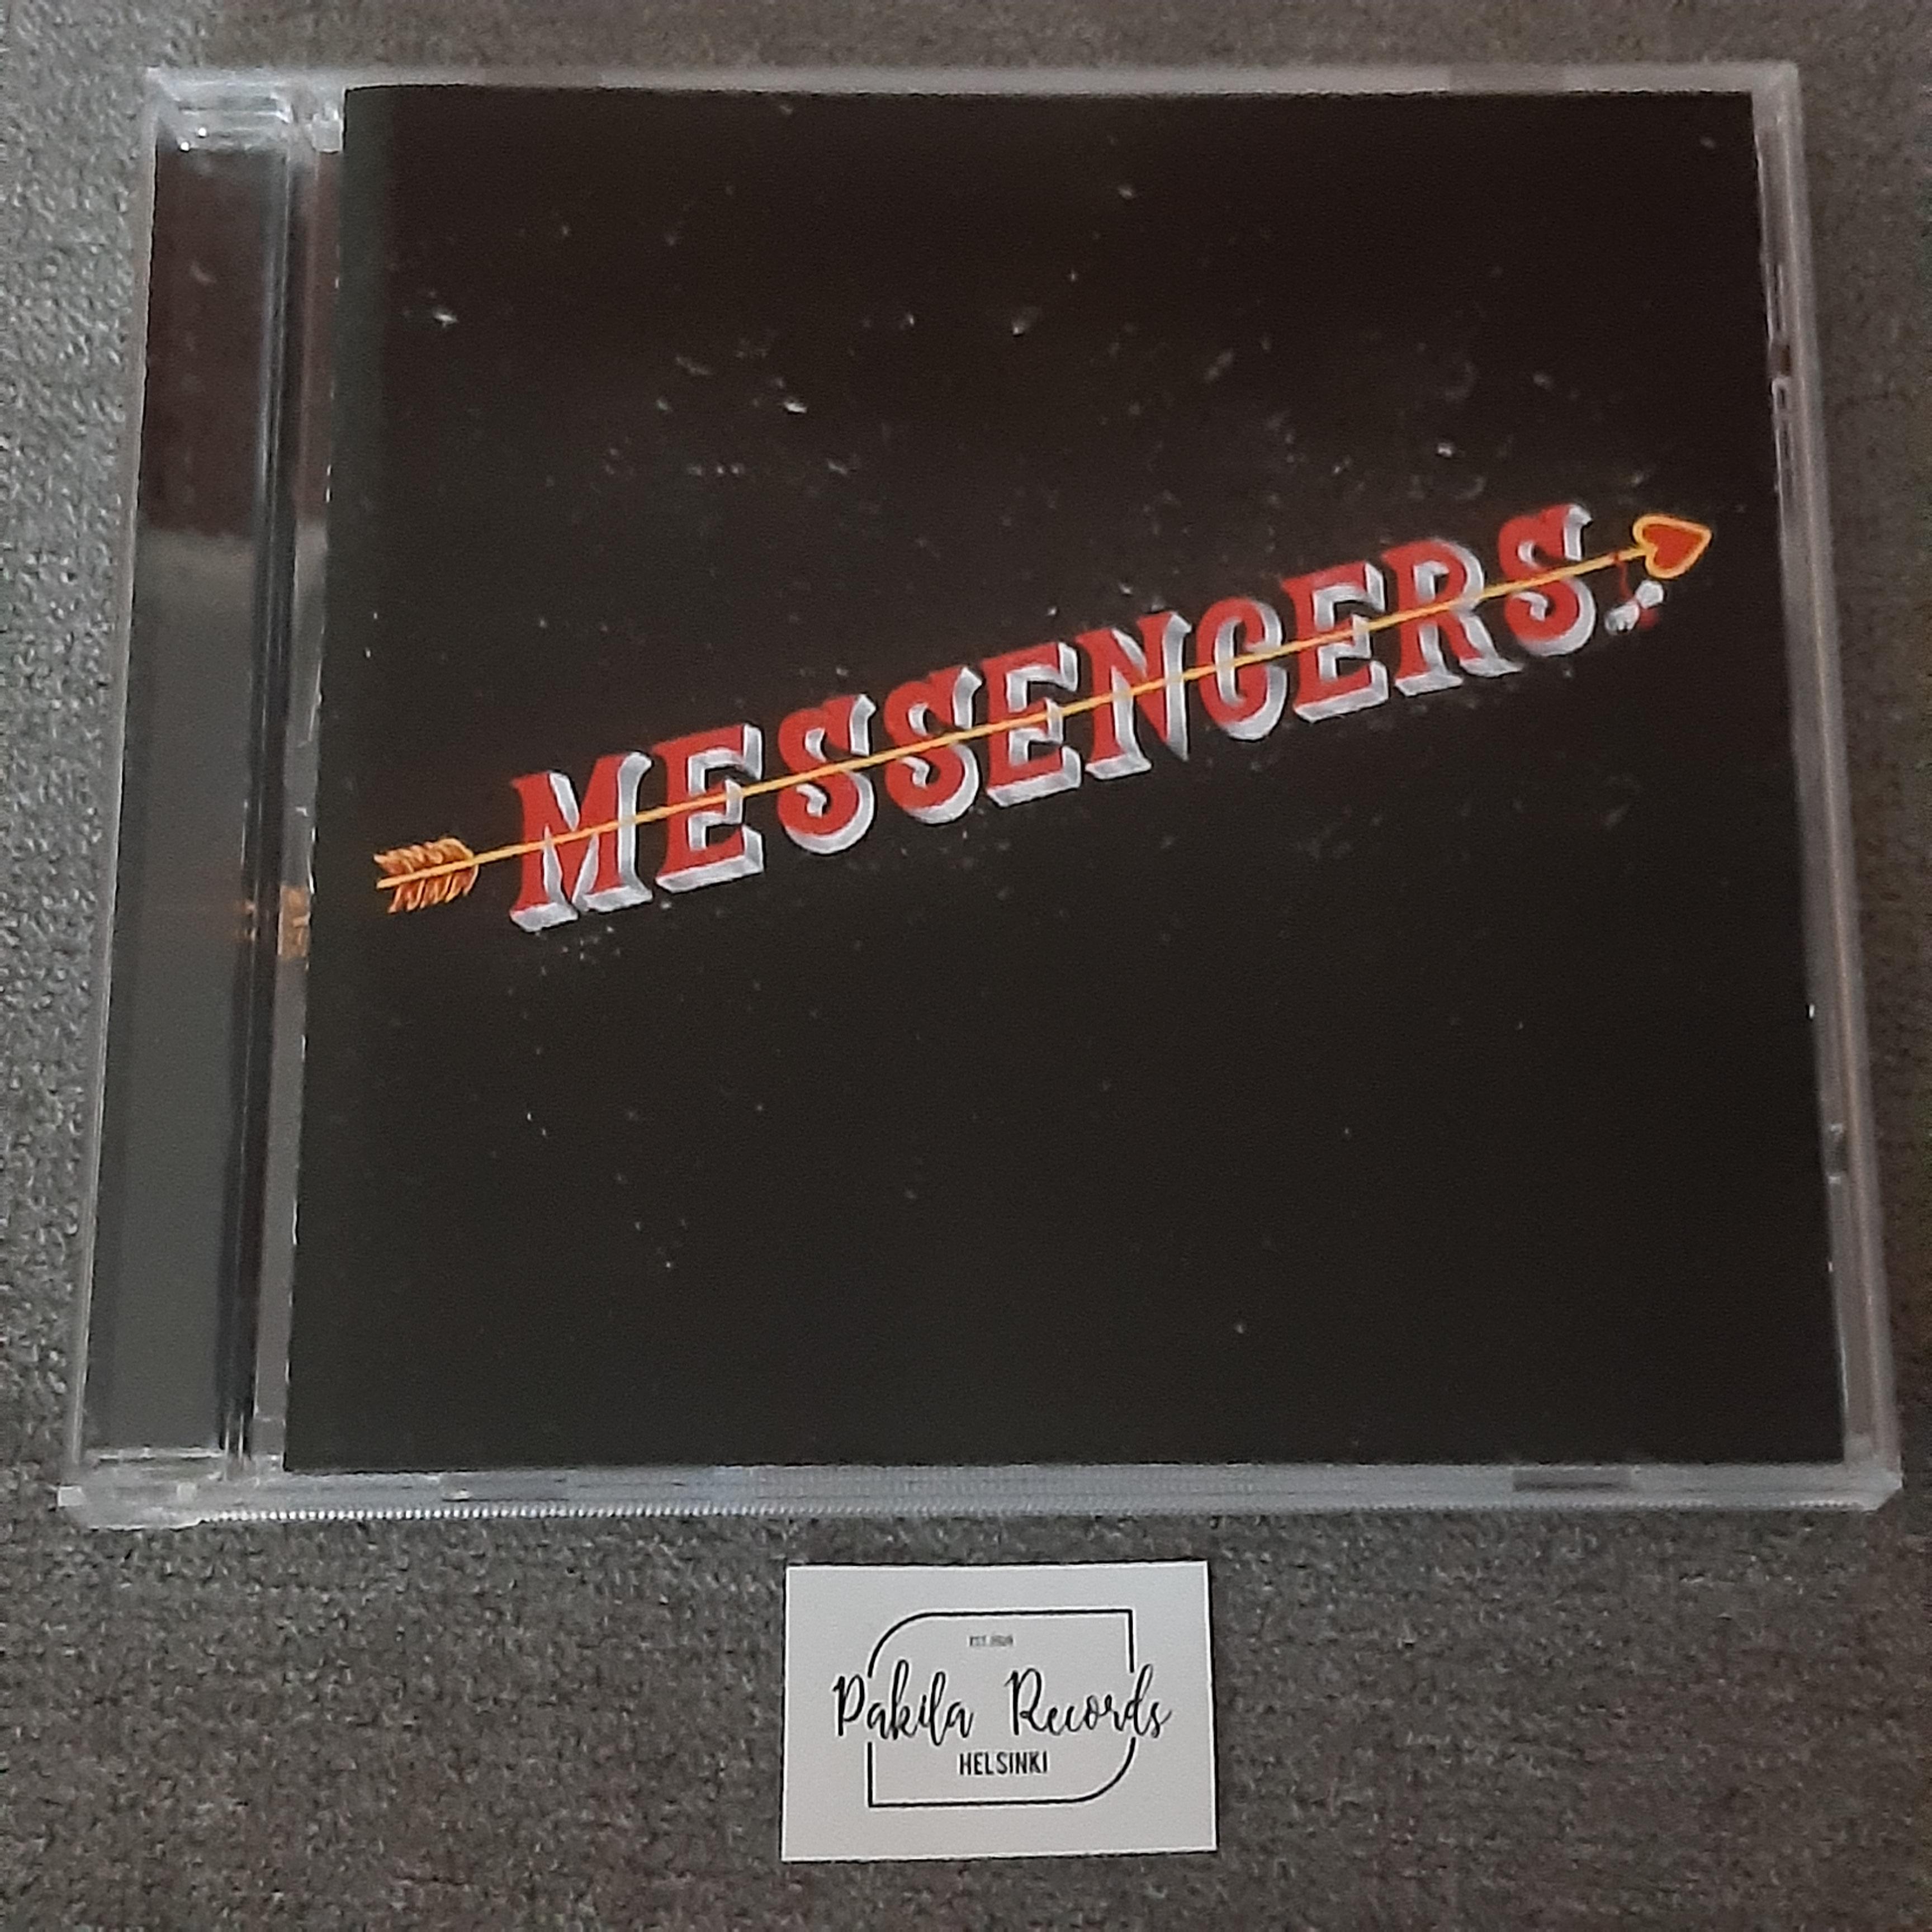 Messengers - Messengers - CD (käytetty)